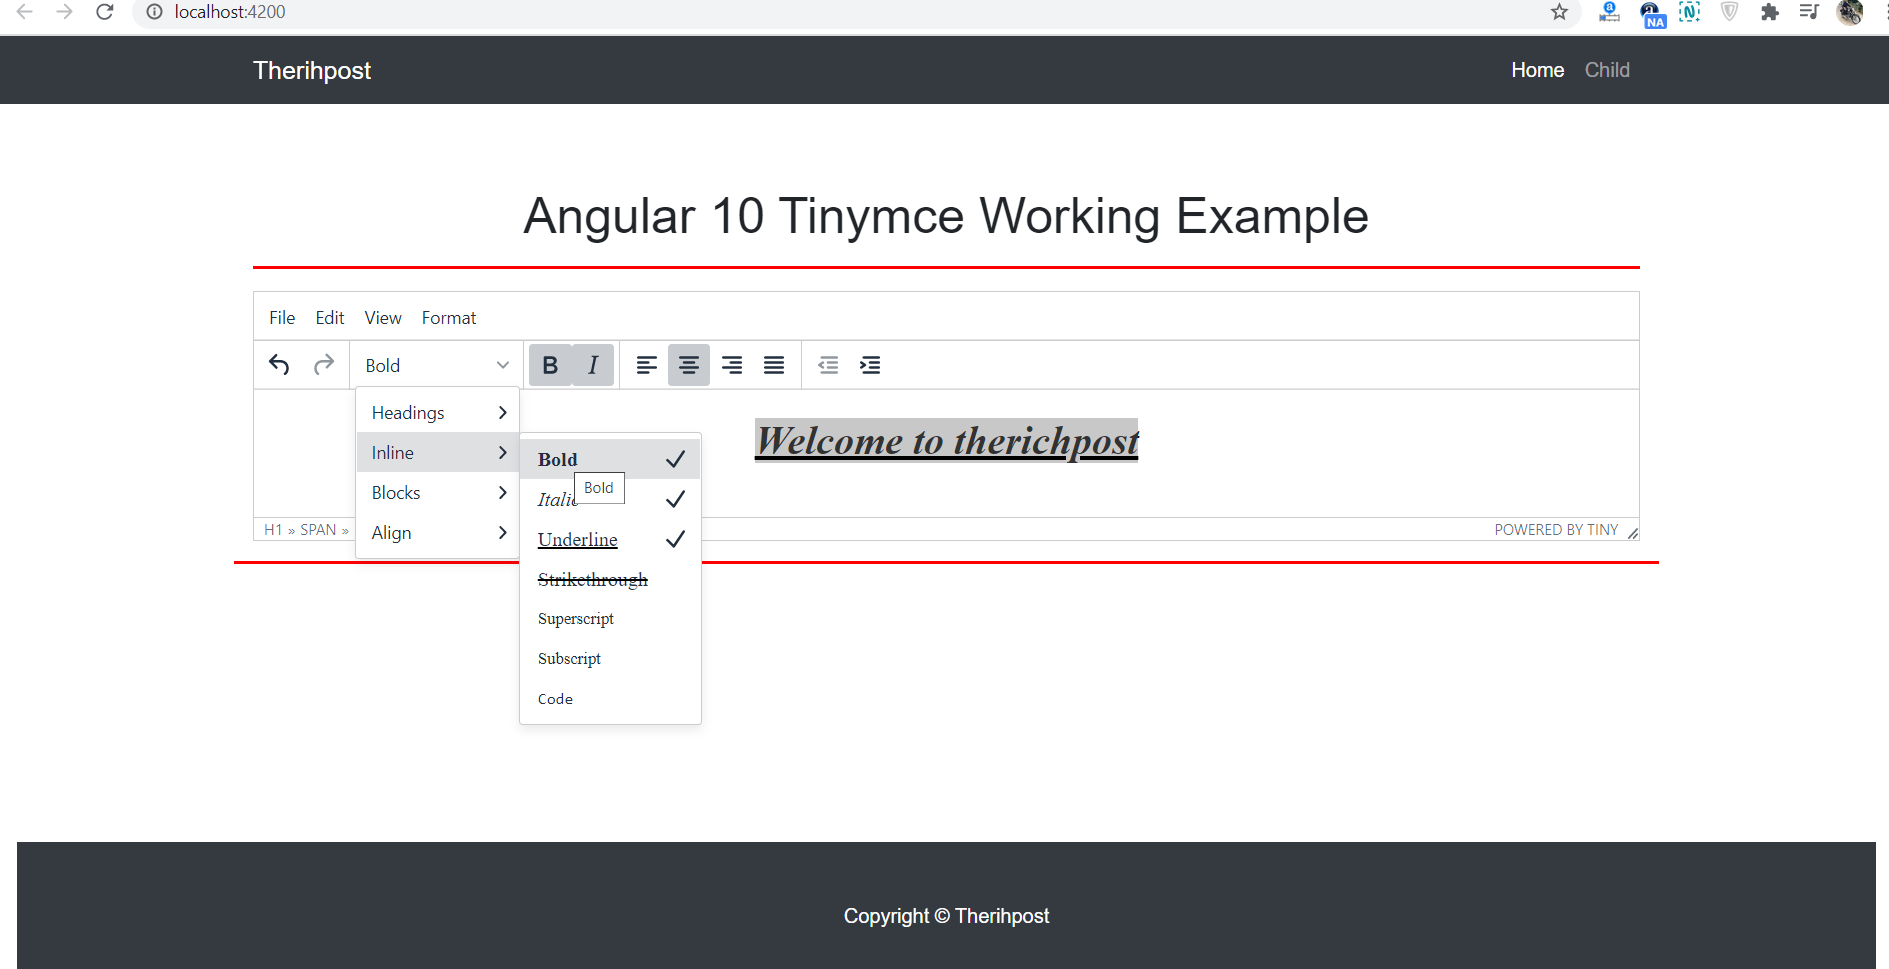 Angular 10 Tinymce Working Example